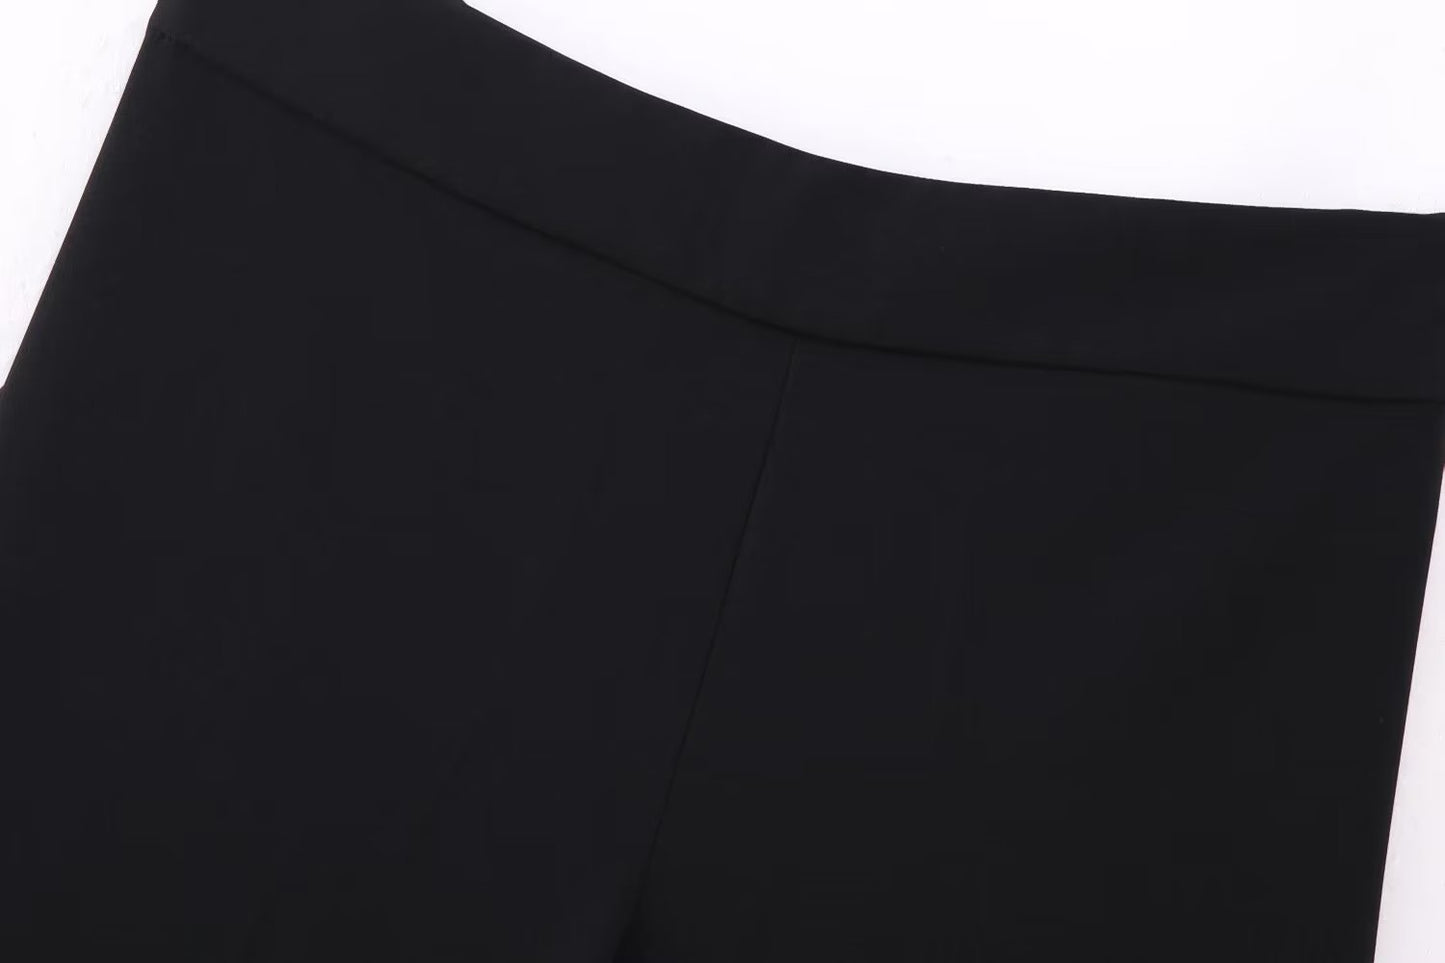 Dark Chic Outfits | Kimono Vest Belt Pants Outfit